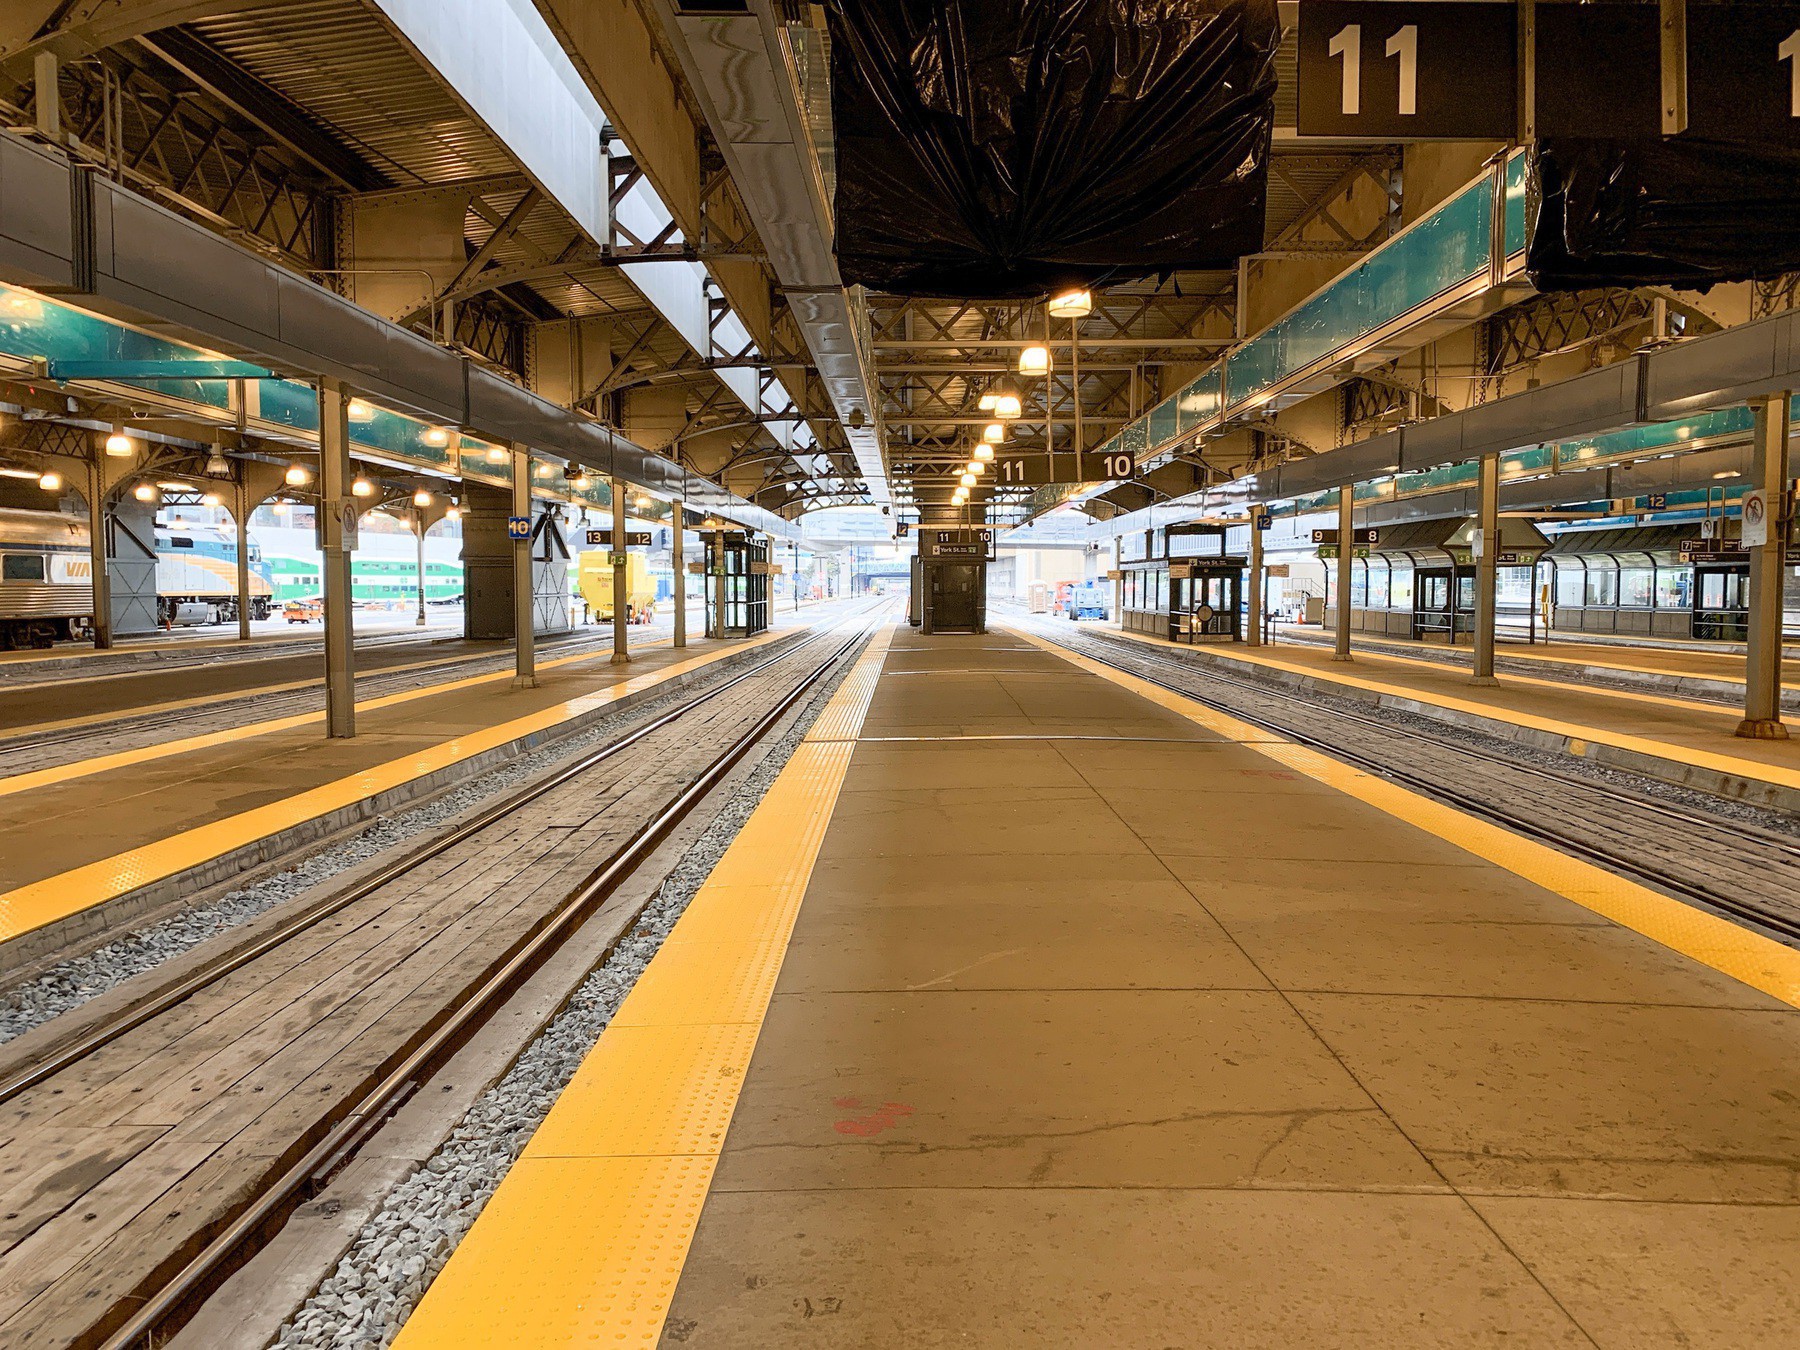 Track 10/11 at Union Station, Toronto, Ontario, Canada.